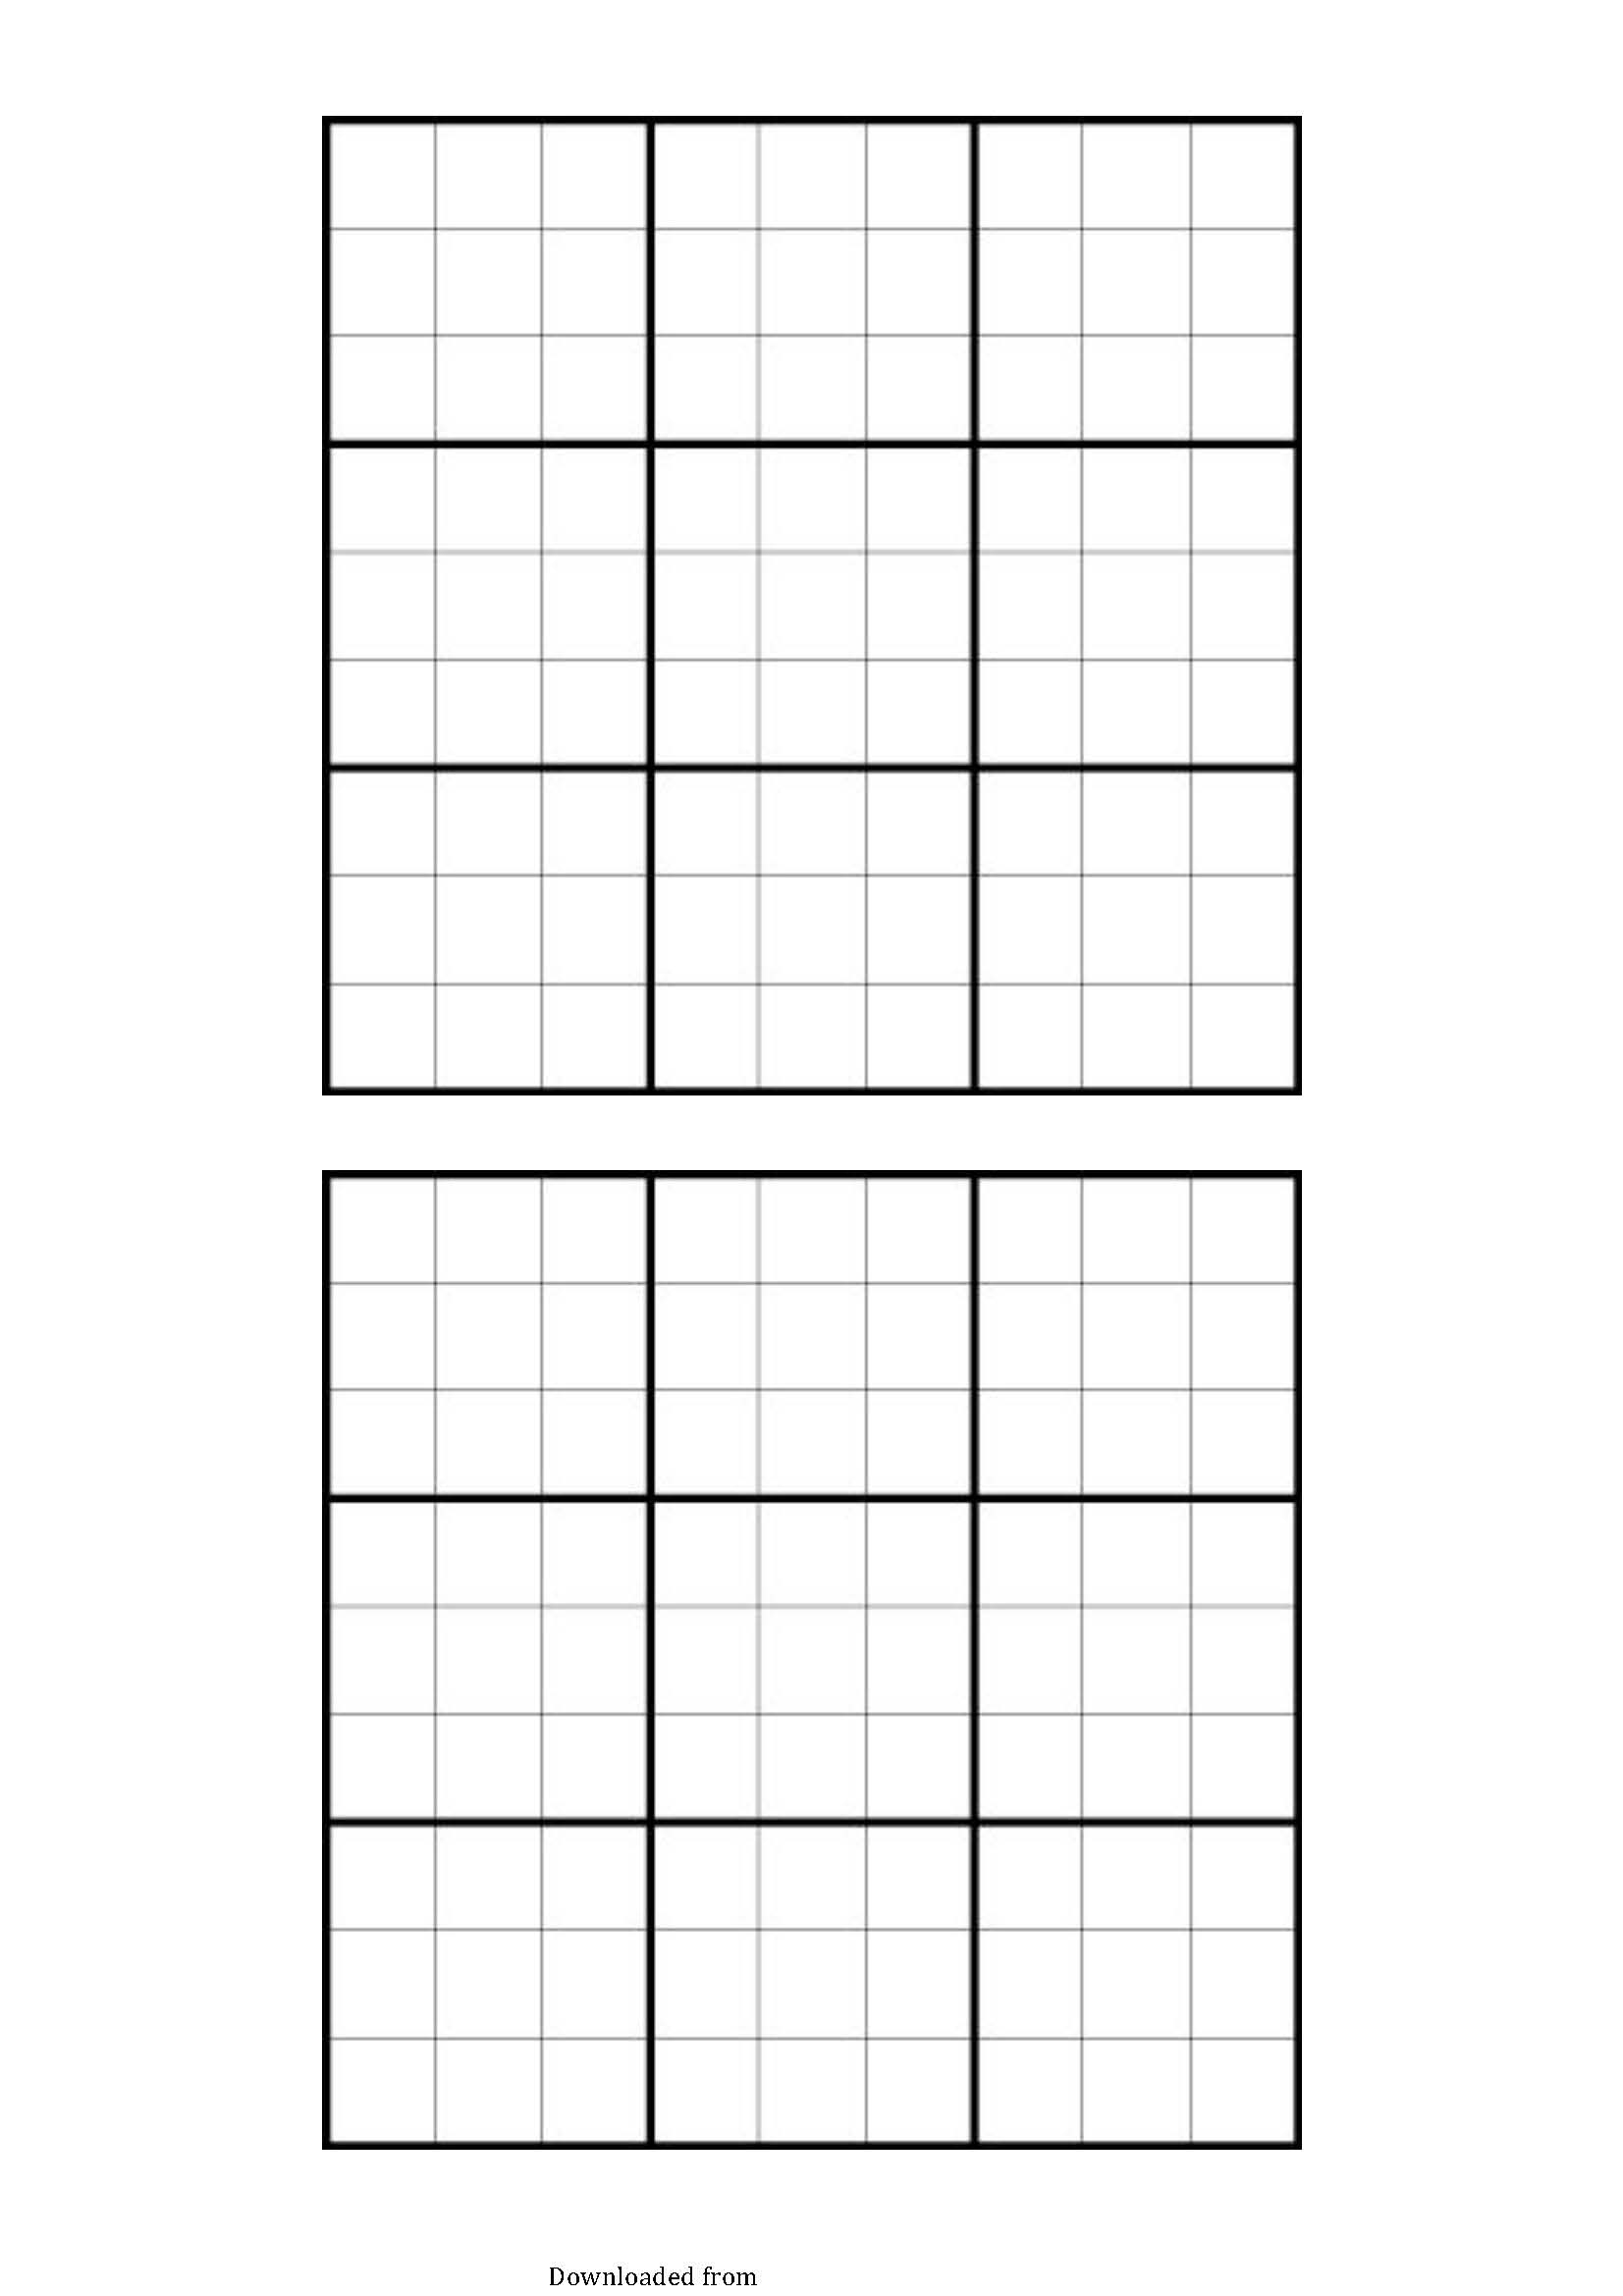 Blank Sudoku Grid PDF Format E database